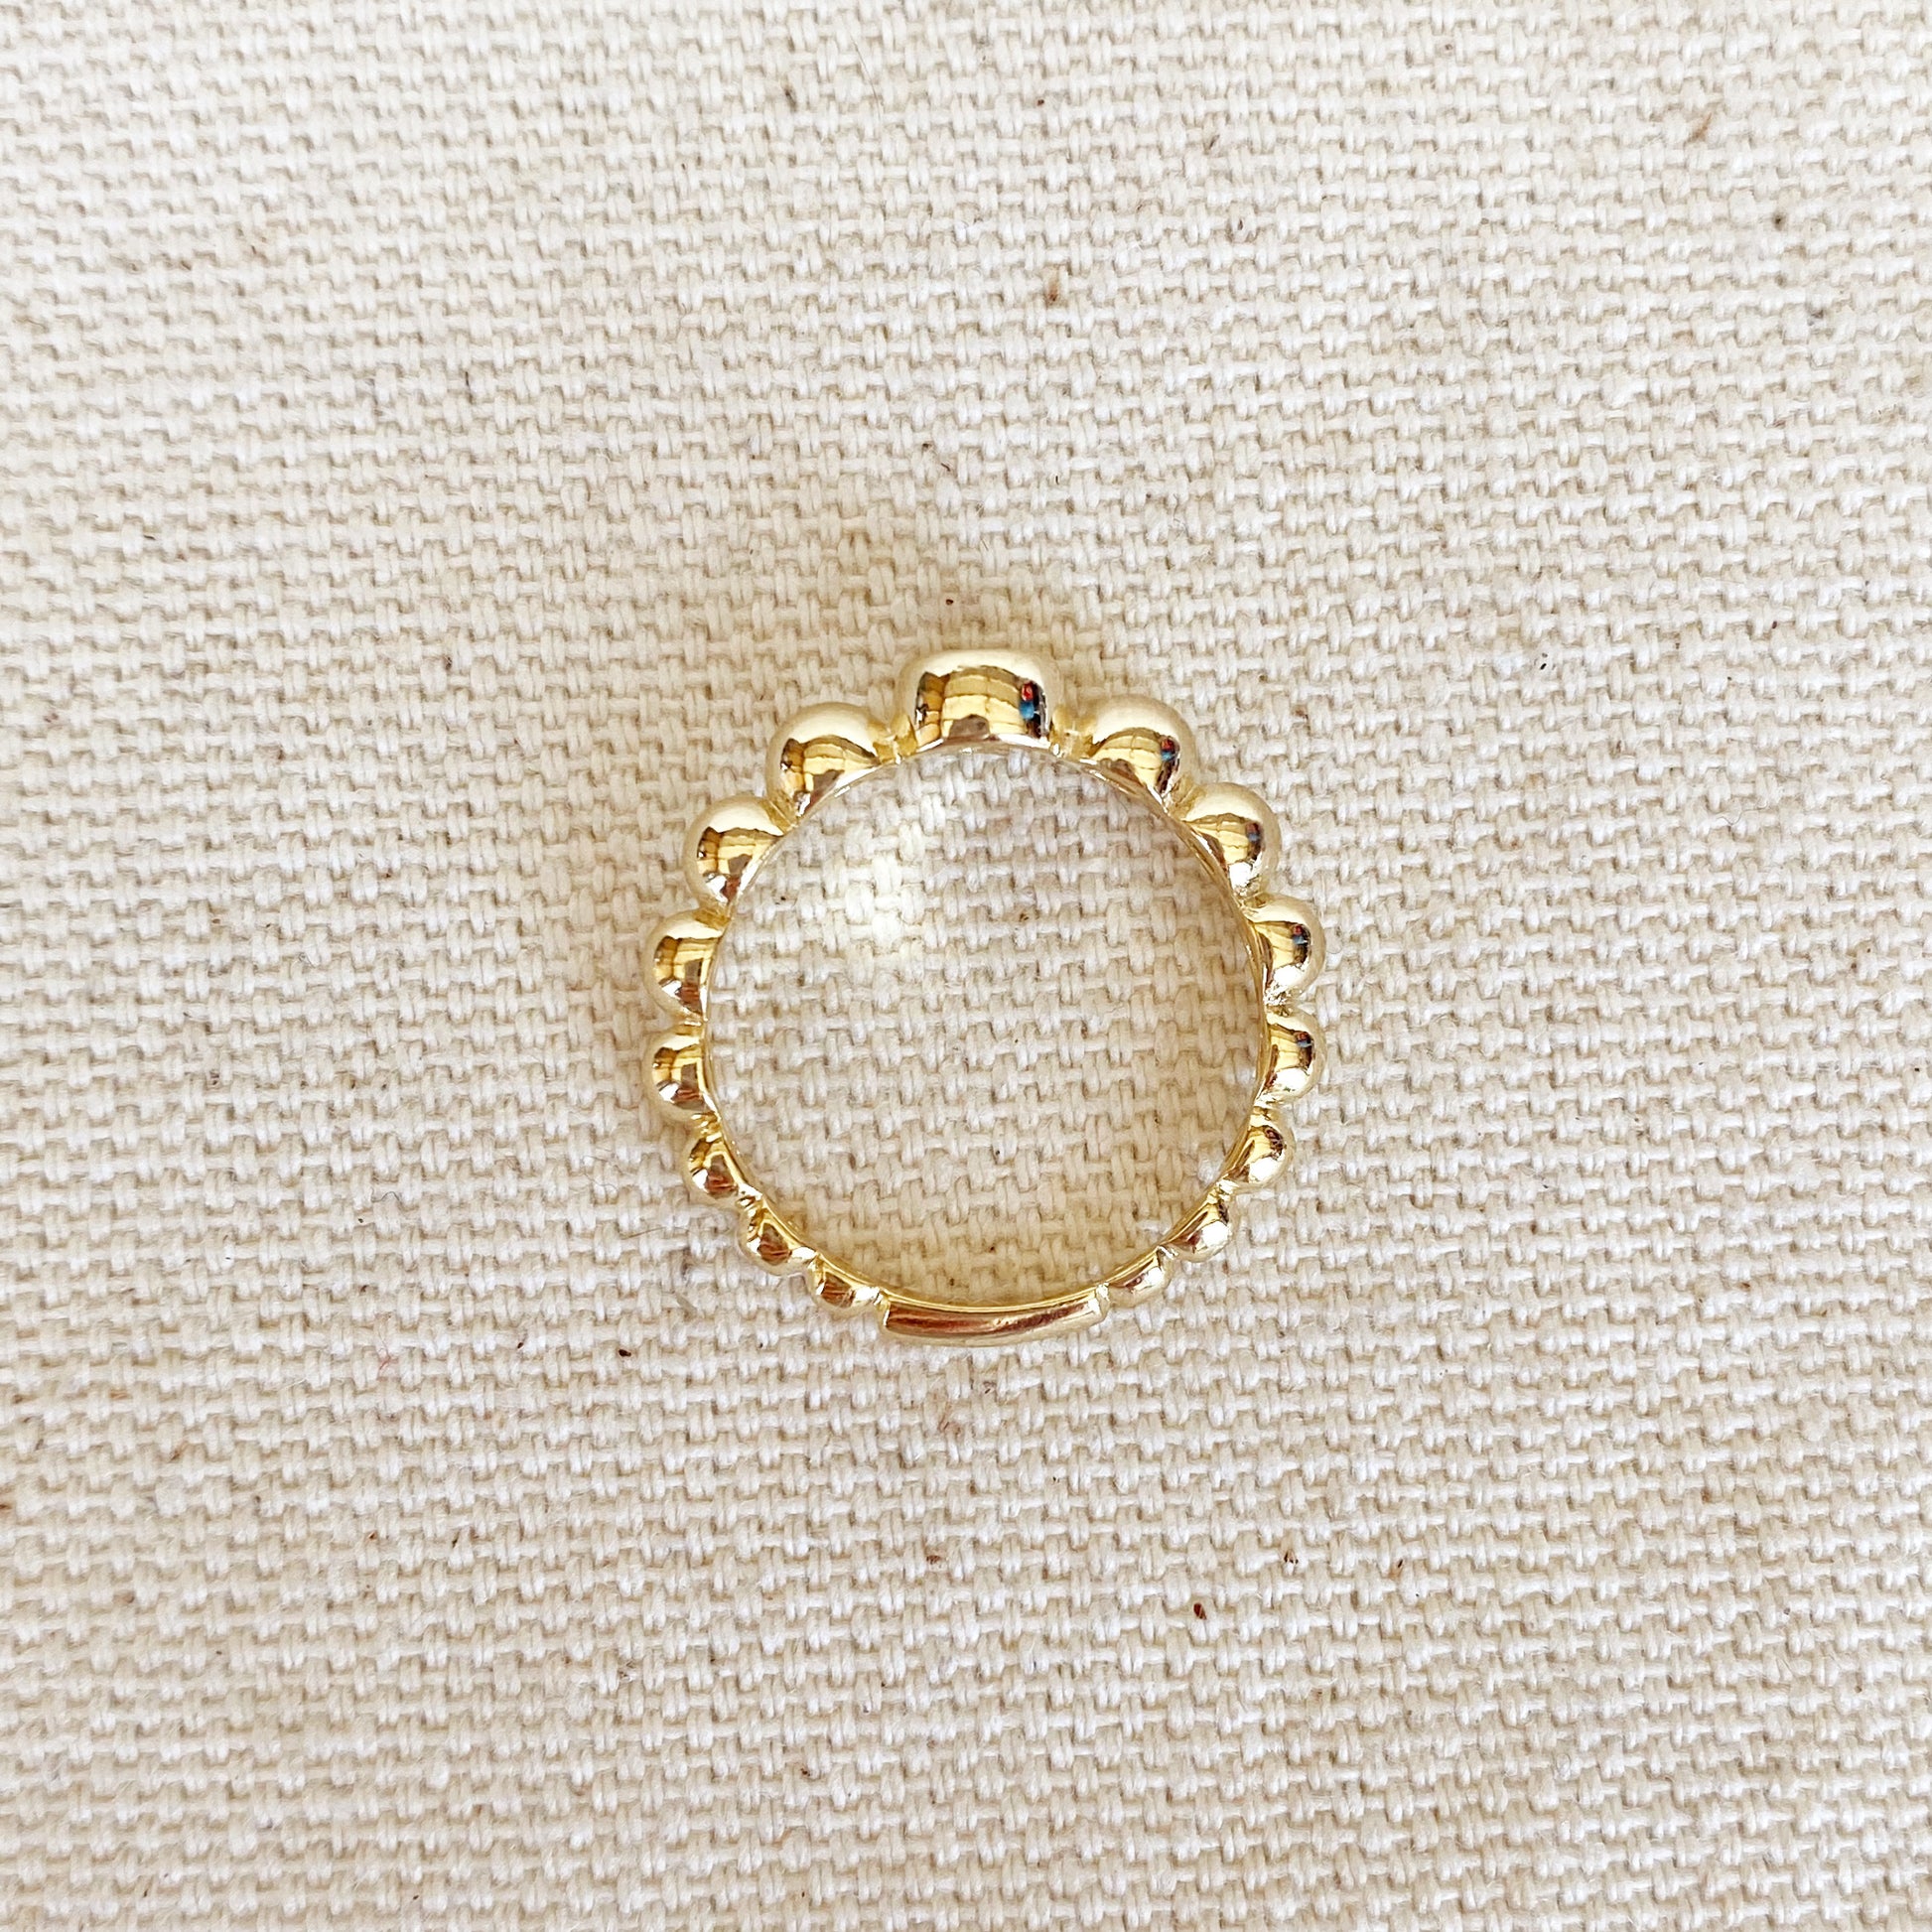 GoldFi 18k Gold Filled Beaded Blue Cubic Zirconia Bezel Ring